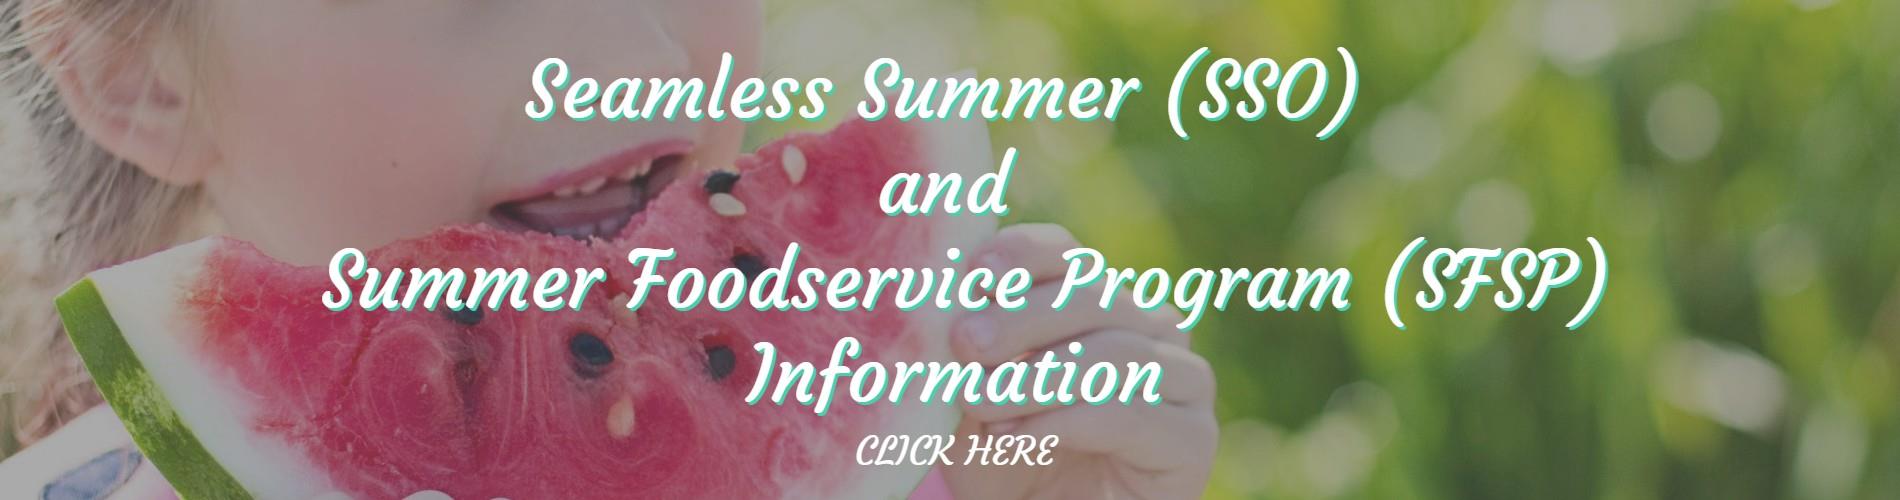 Seamless Summer Food Program Banner